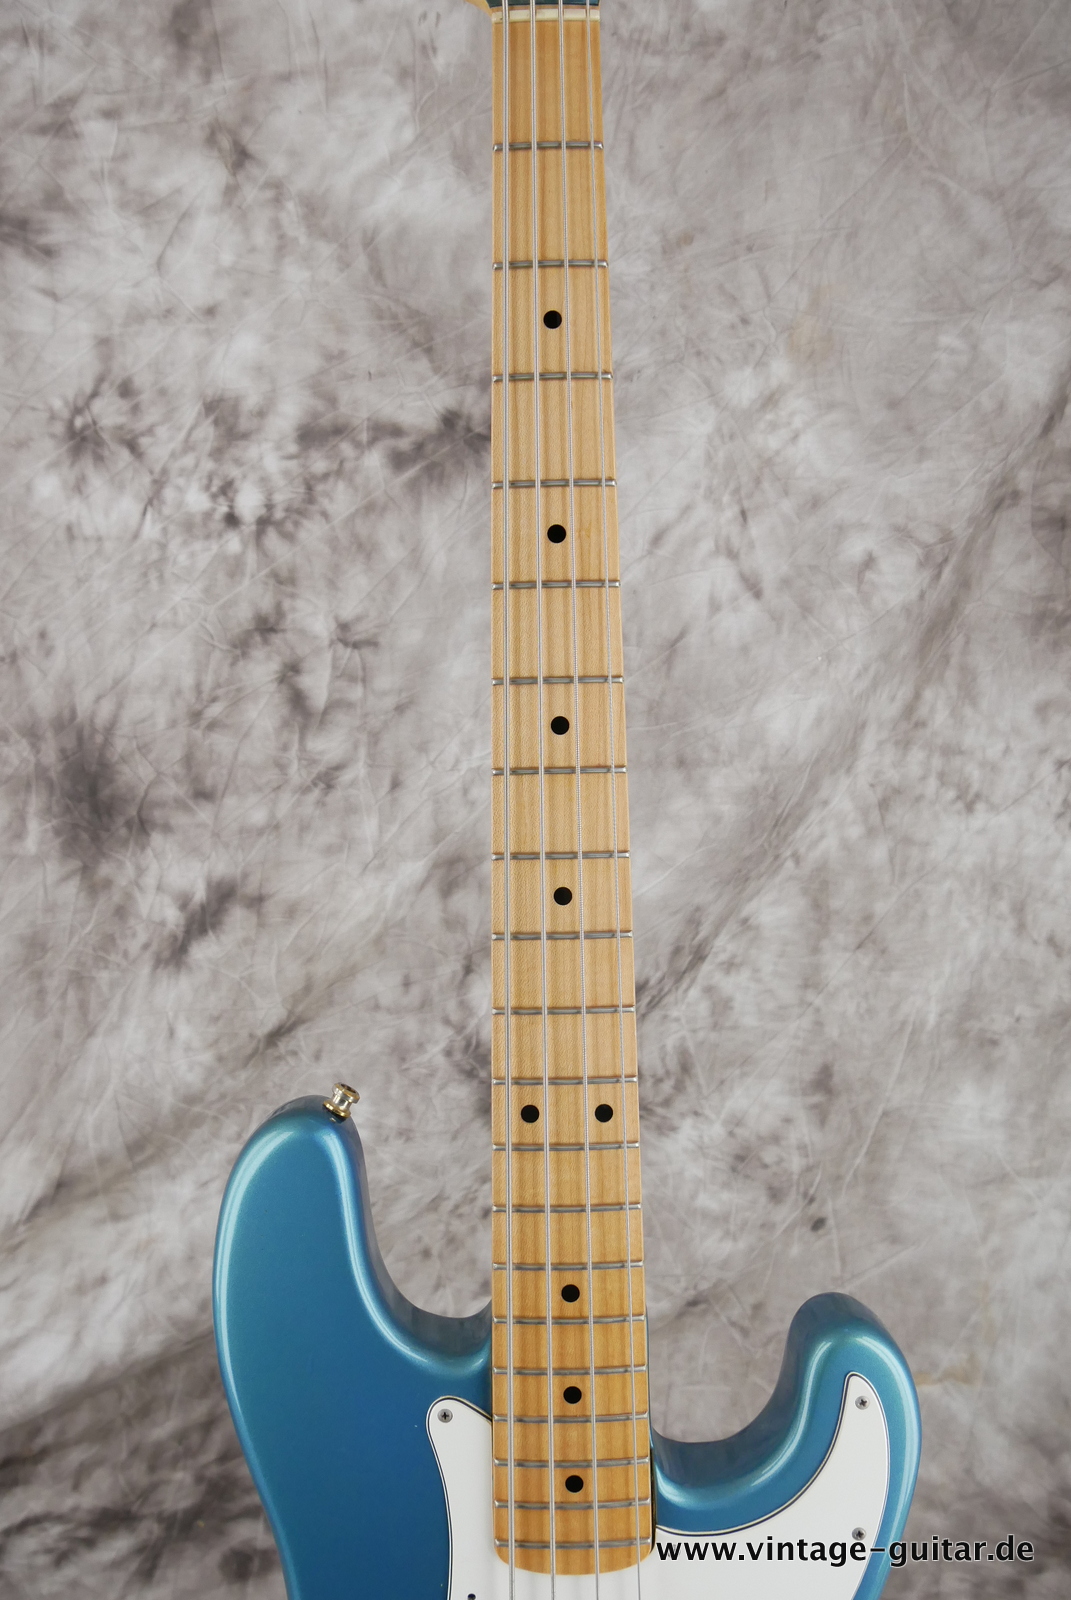 Fender_Precision_Special_USA_lake_placid_blue_1983-011.JPG